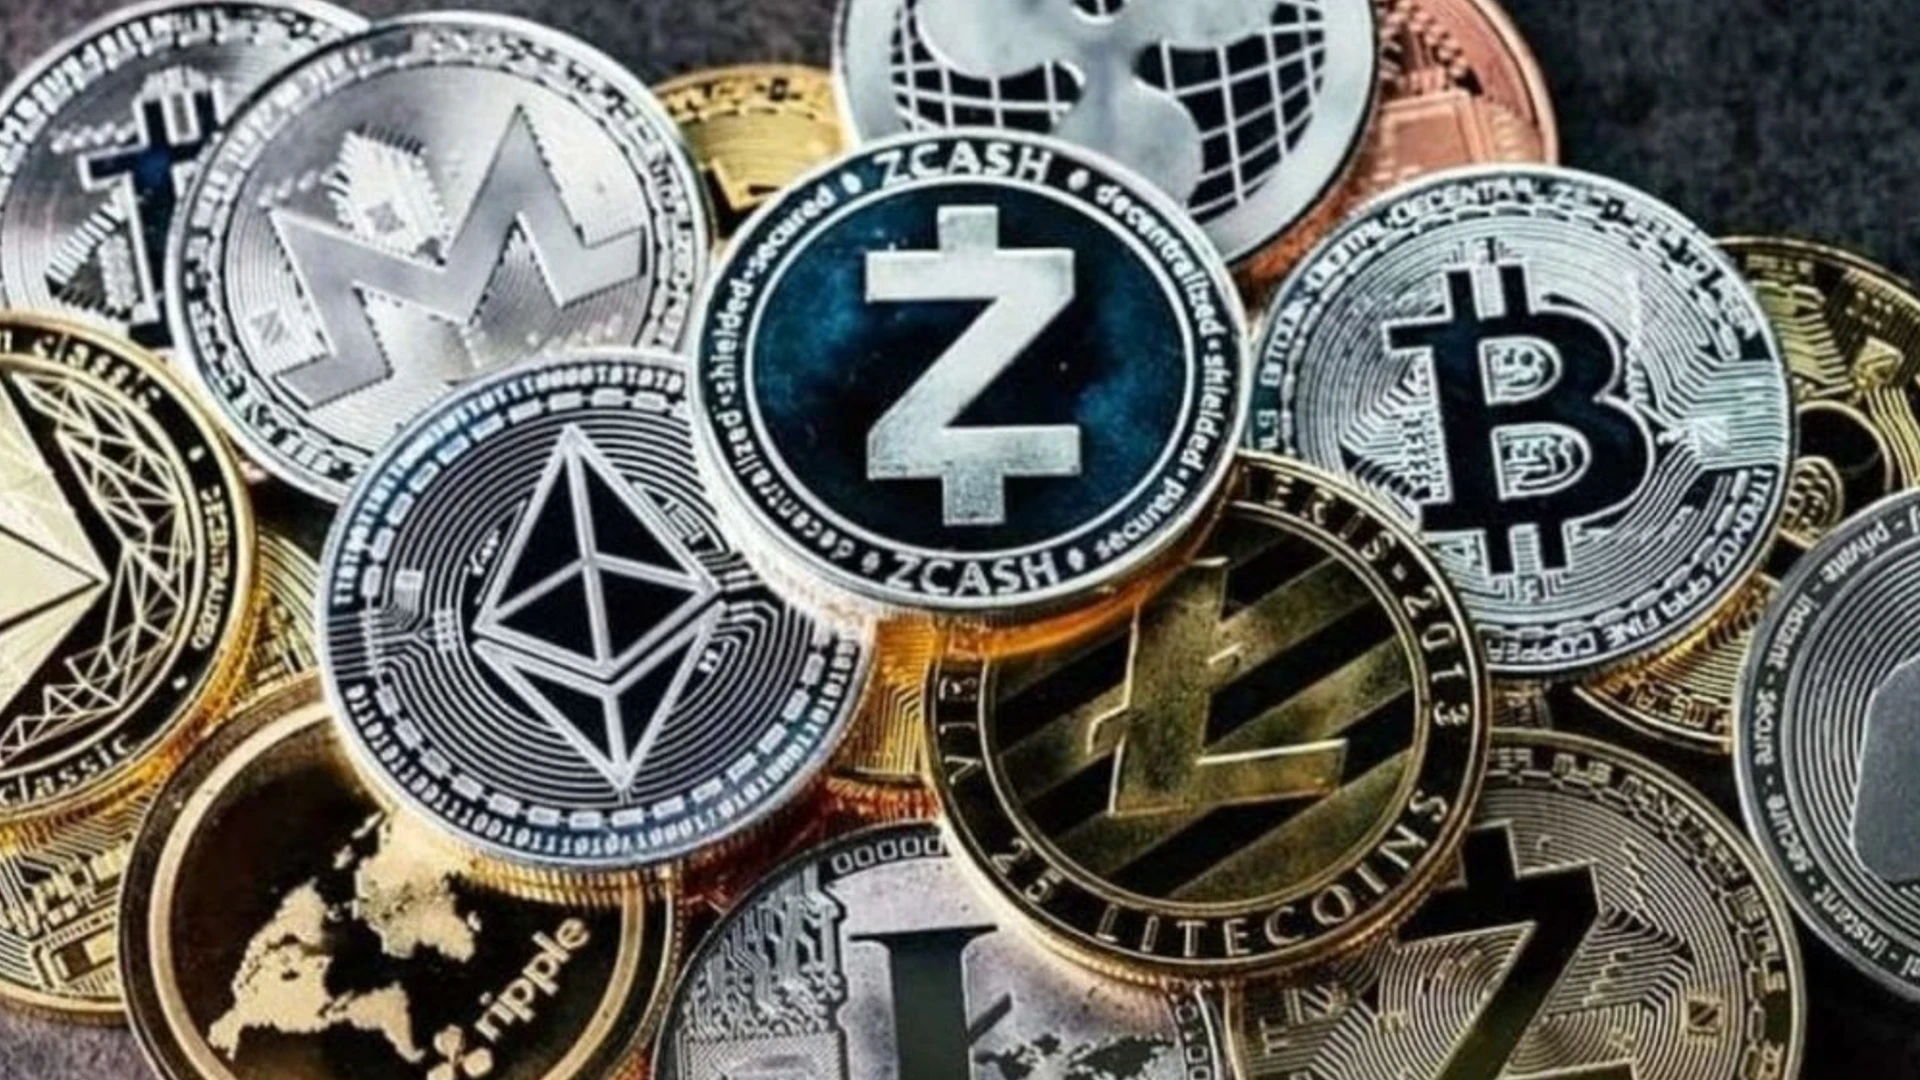 Bitcoin nears $40,000 as cryptocurrency markets plummet